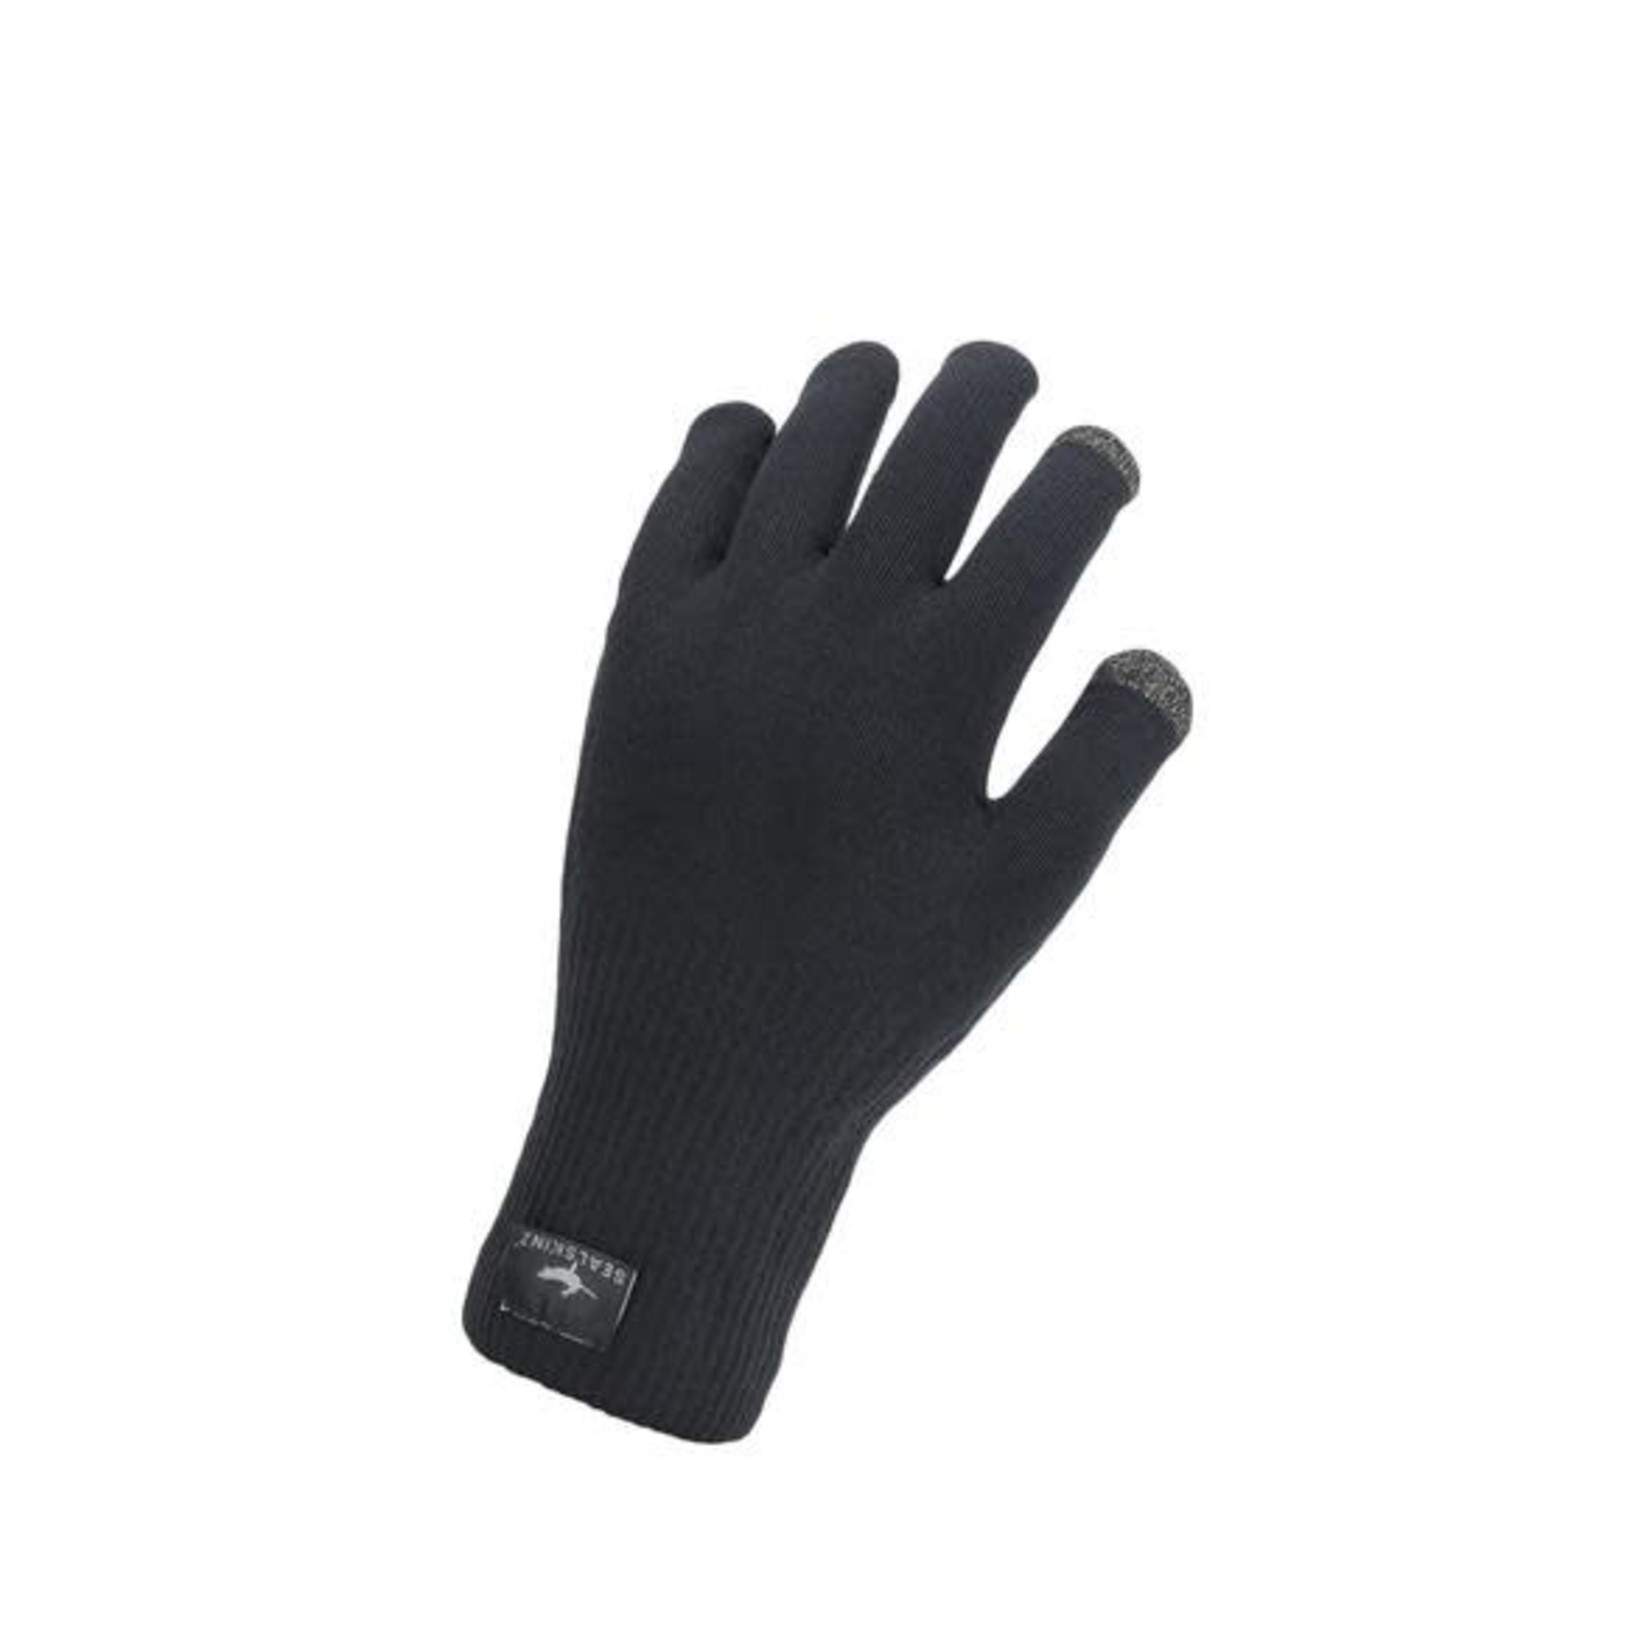 SealSkinz SealSkinz Waterproof All Weather Ultra Grip Knitted Glove